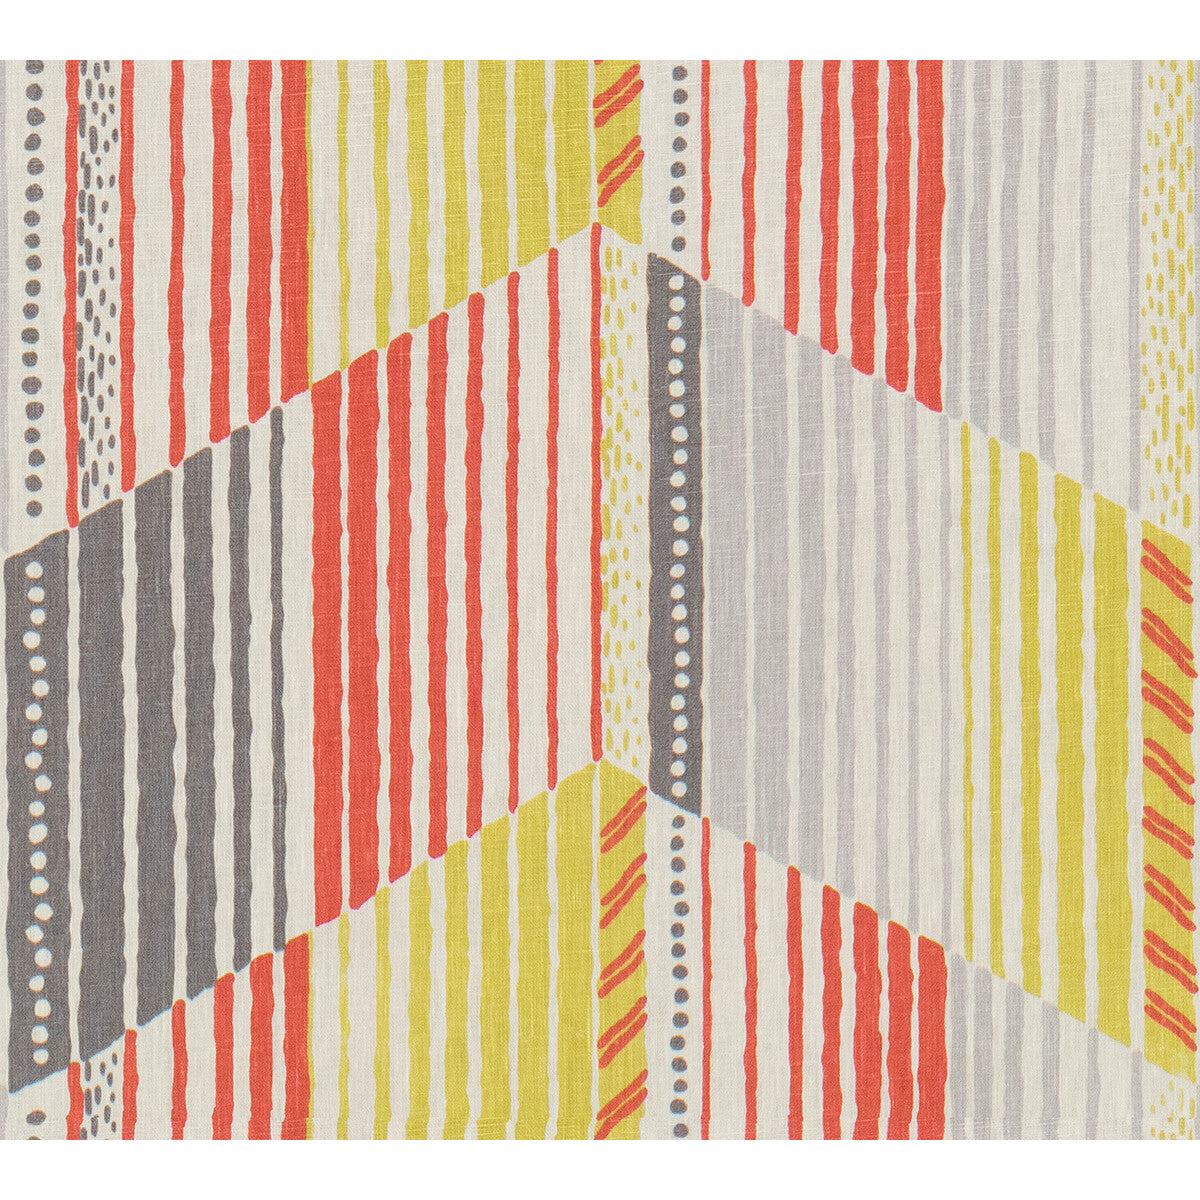 Reflex fabric in sunrise color - pattern REFLEX.411.0 - by Kravet Design